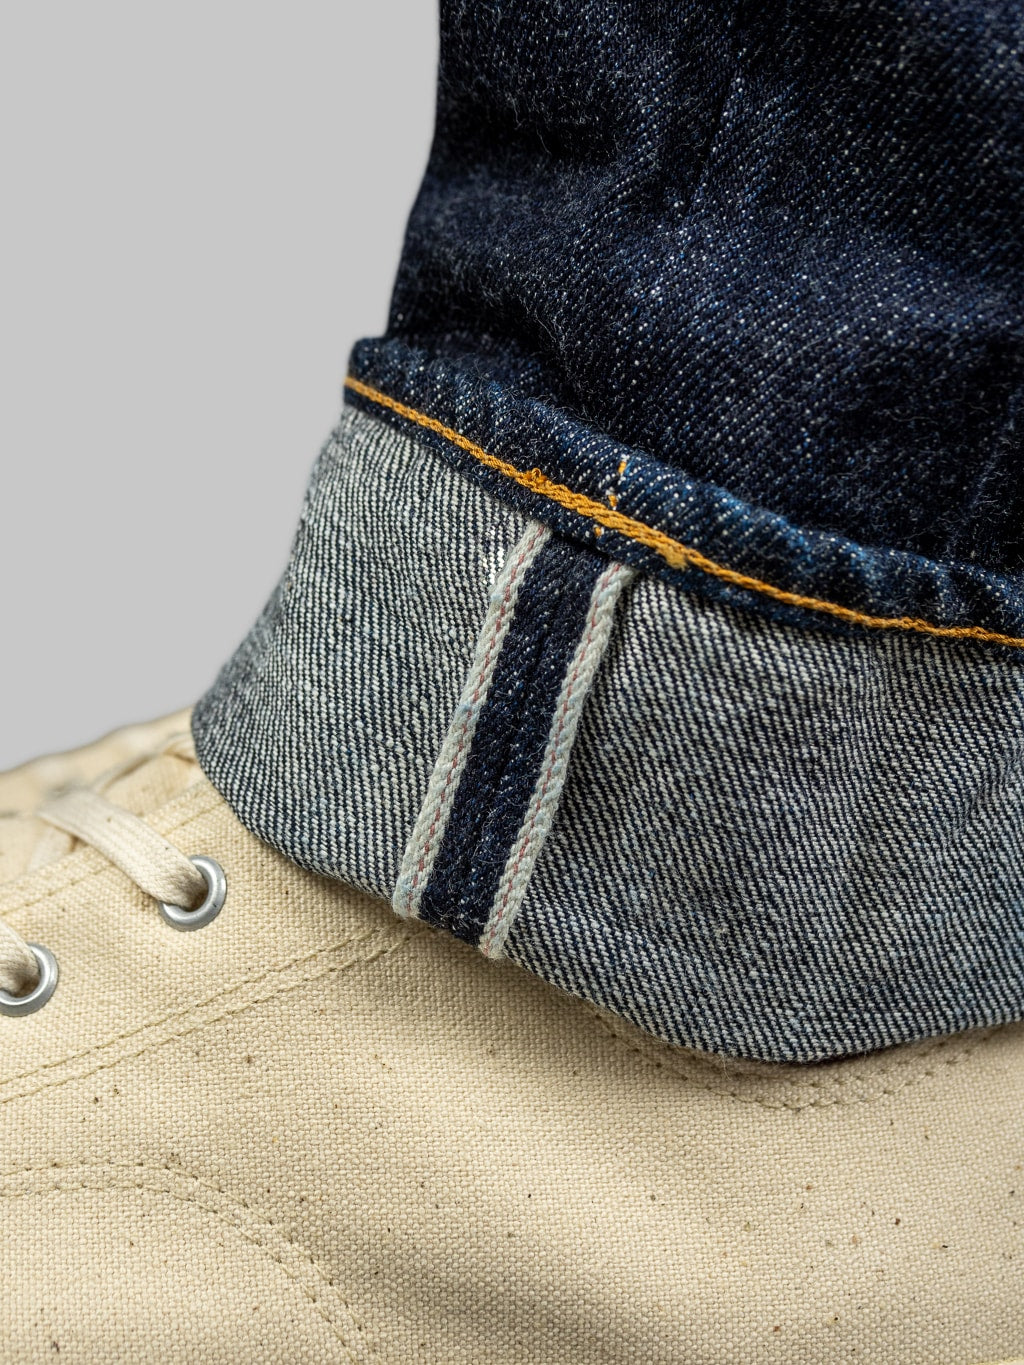 TCB 50s Slim R Jeans  selvedge closeup